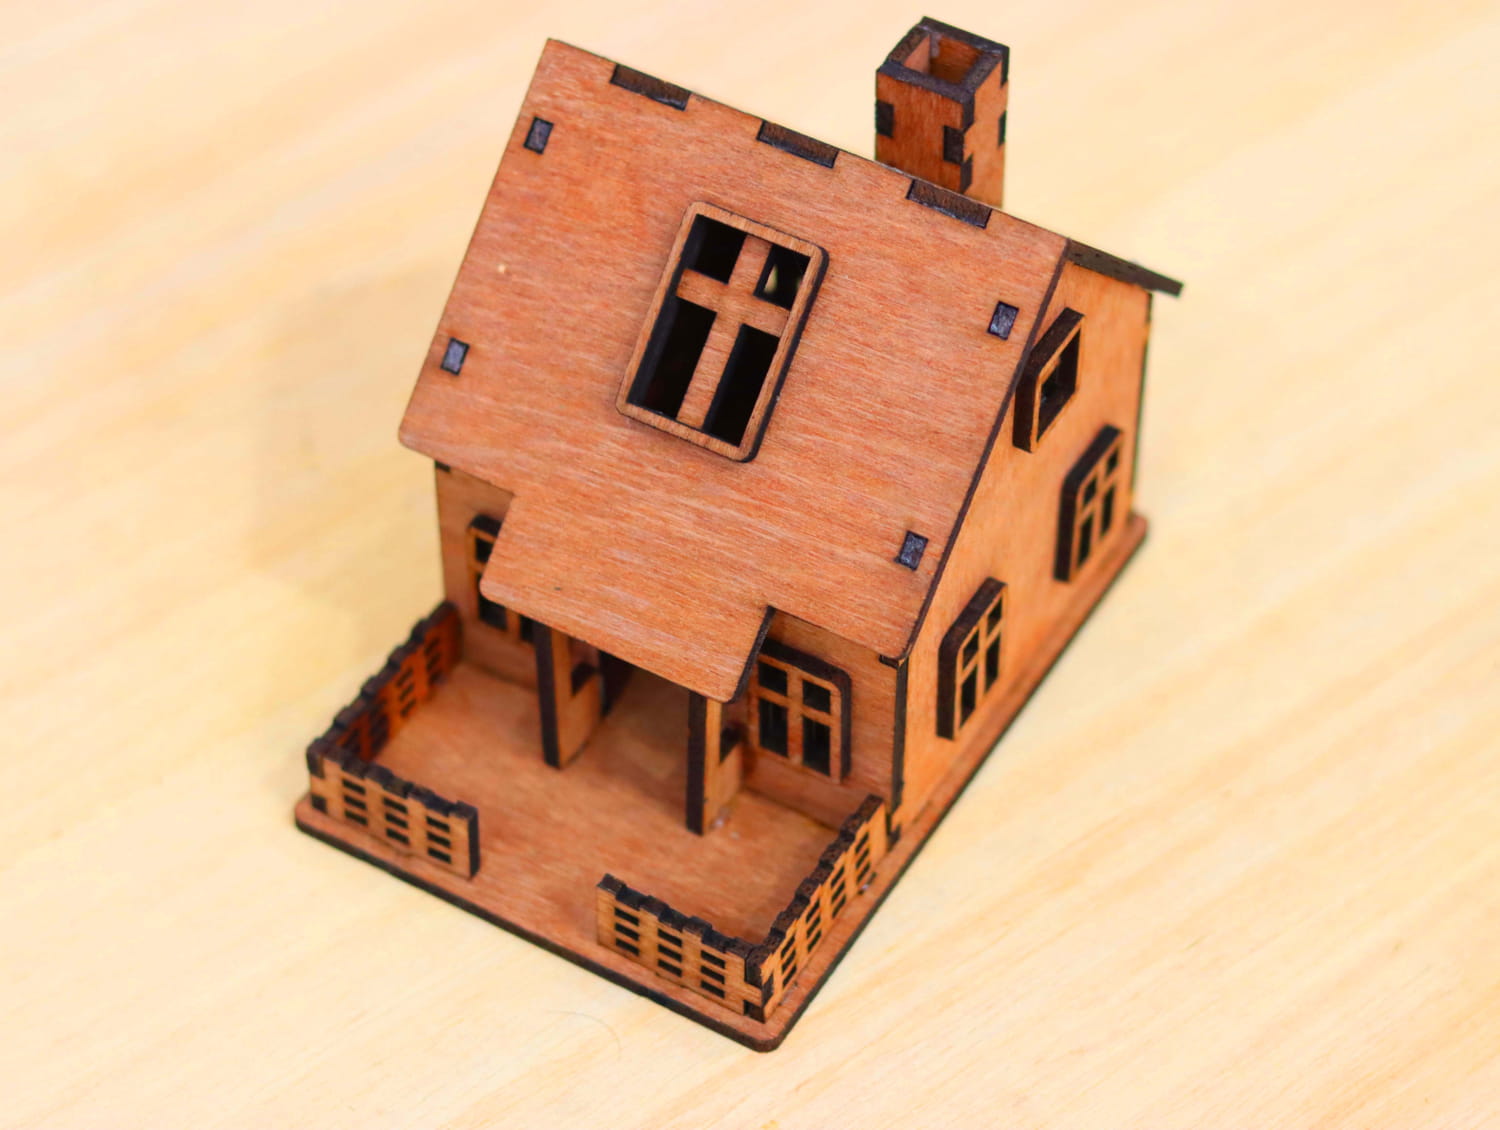 Laser Cut Wood House Model Free Vector